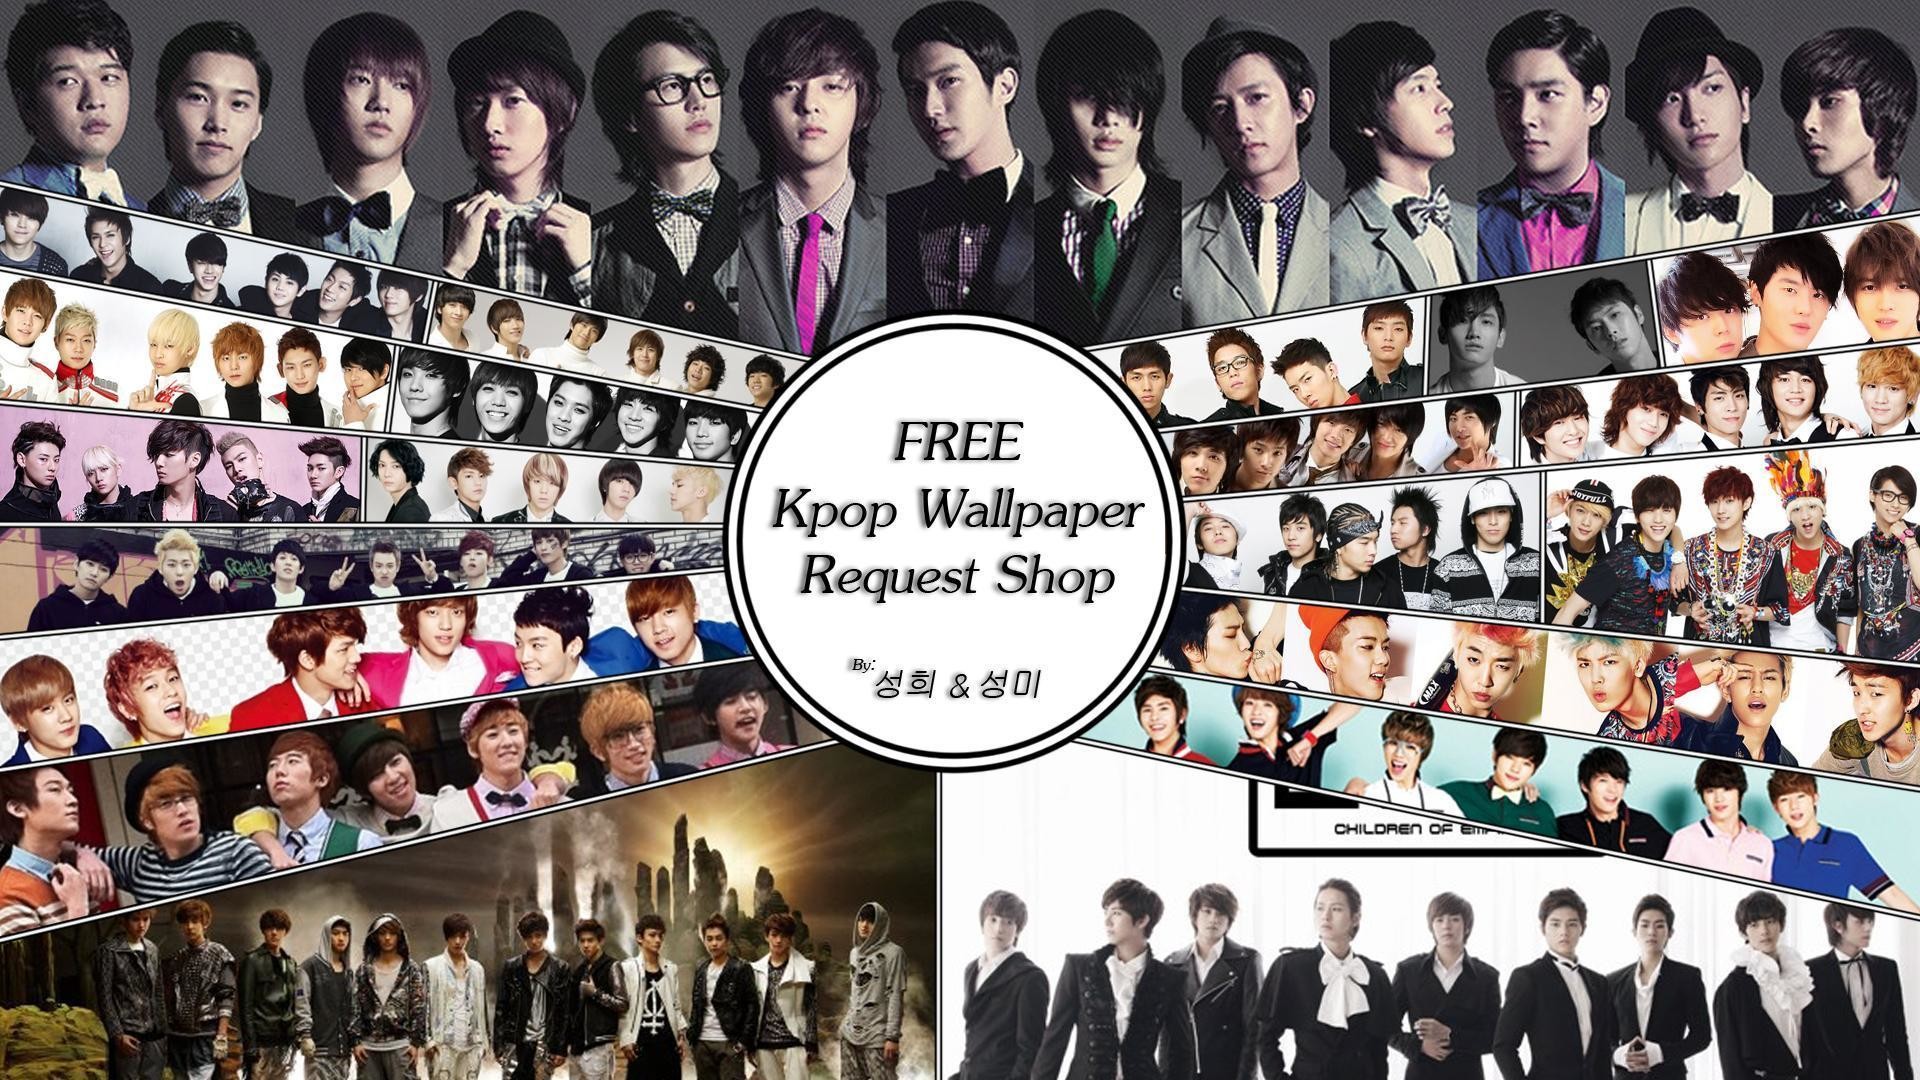 kpop wallpaper,soziale gruppe,collage,kunst,veranstaltung,fotografie